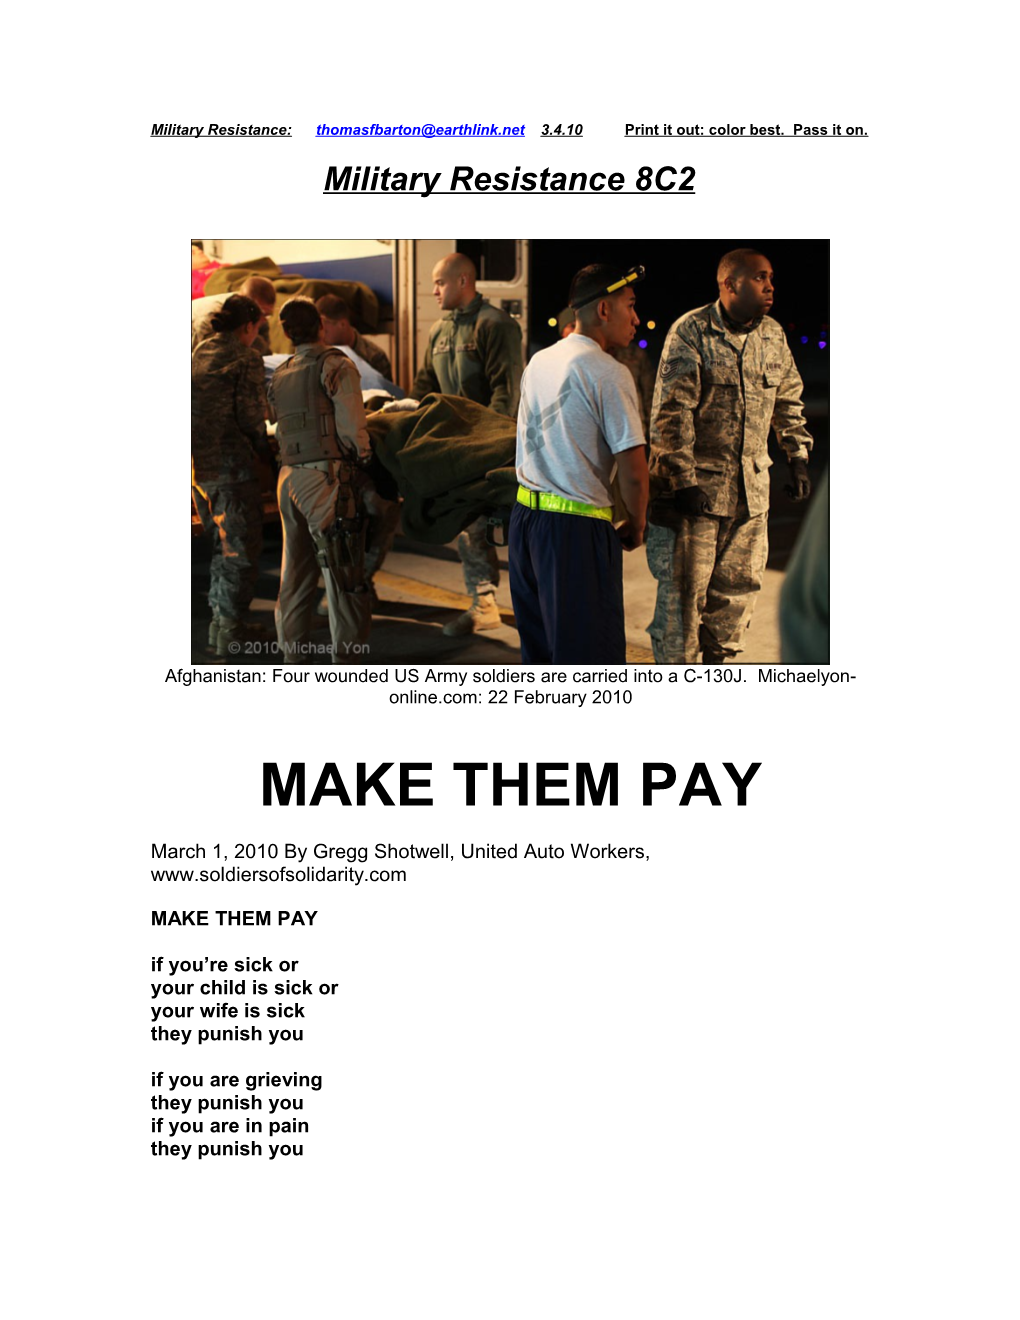 Military Resistance 8C2